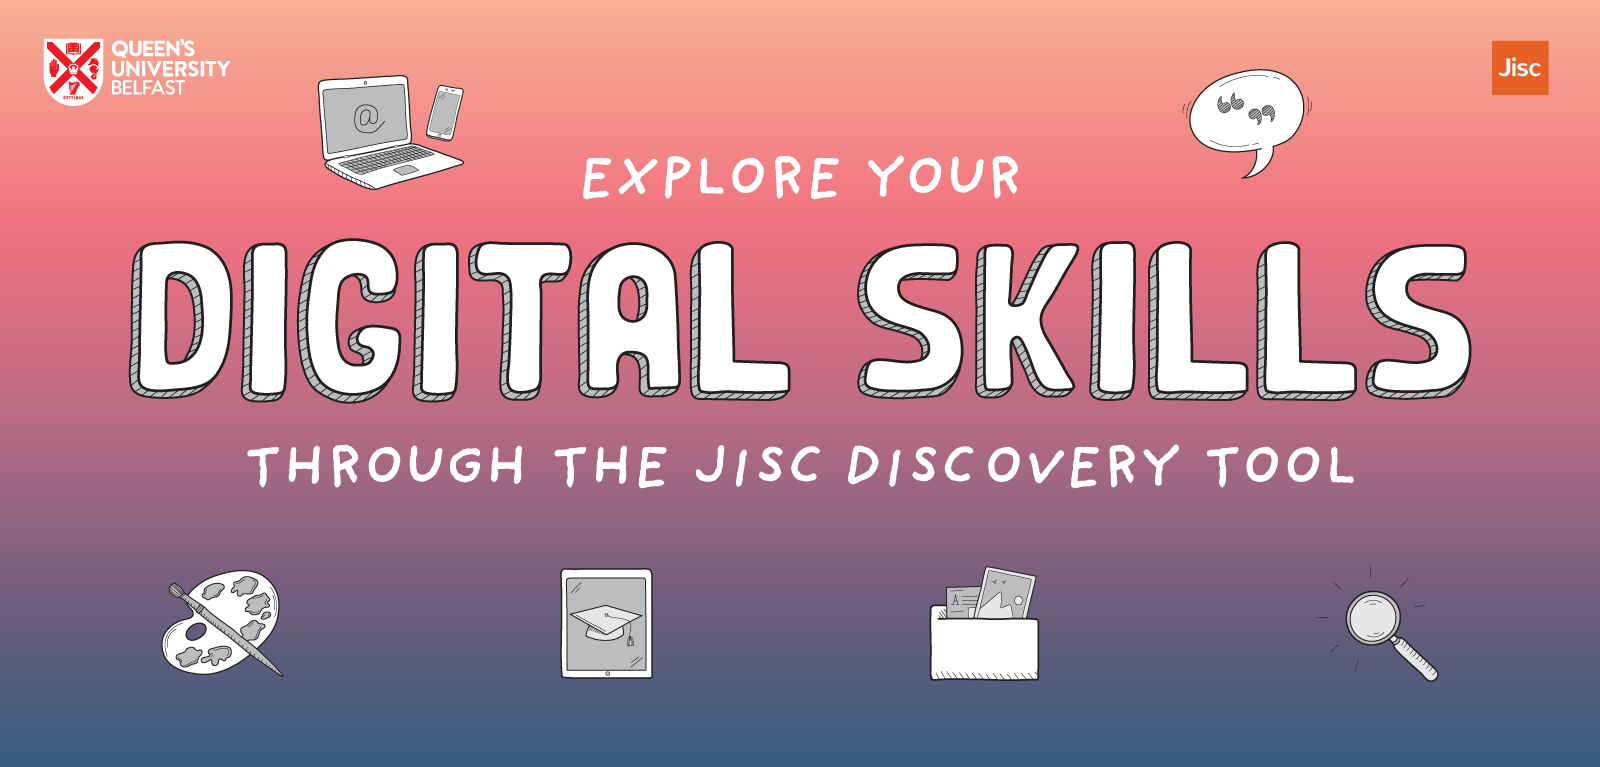 Explore your Digital Skills through the Jisc Discovery Tool